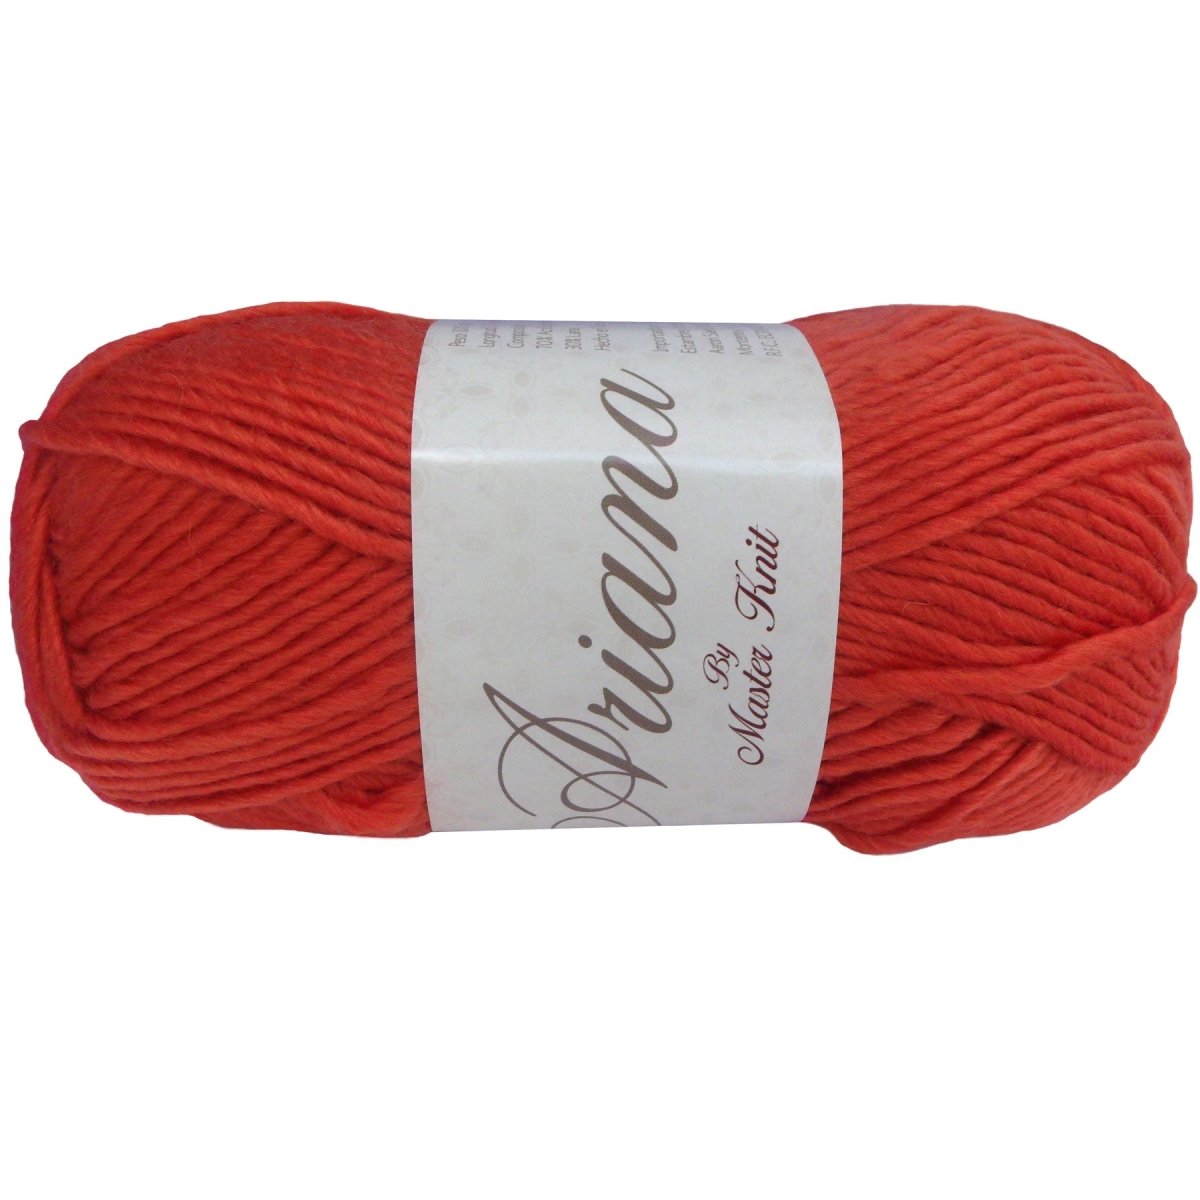 ARIANA - Aran - Crochetstores9510-599